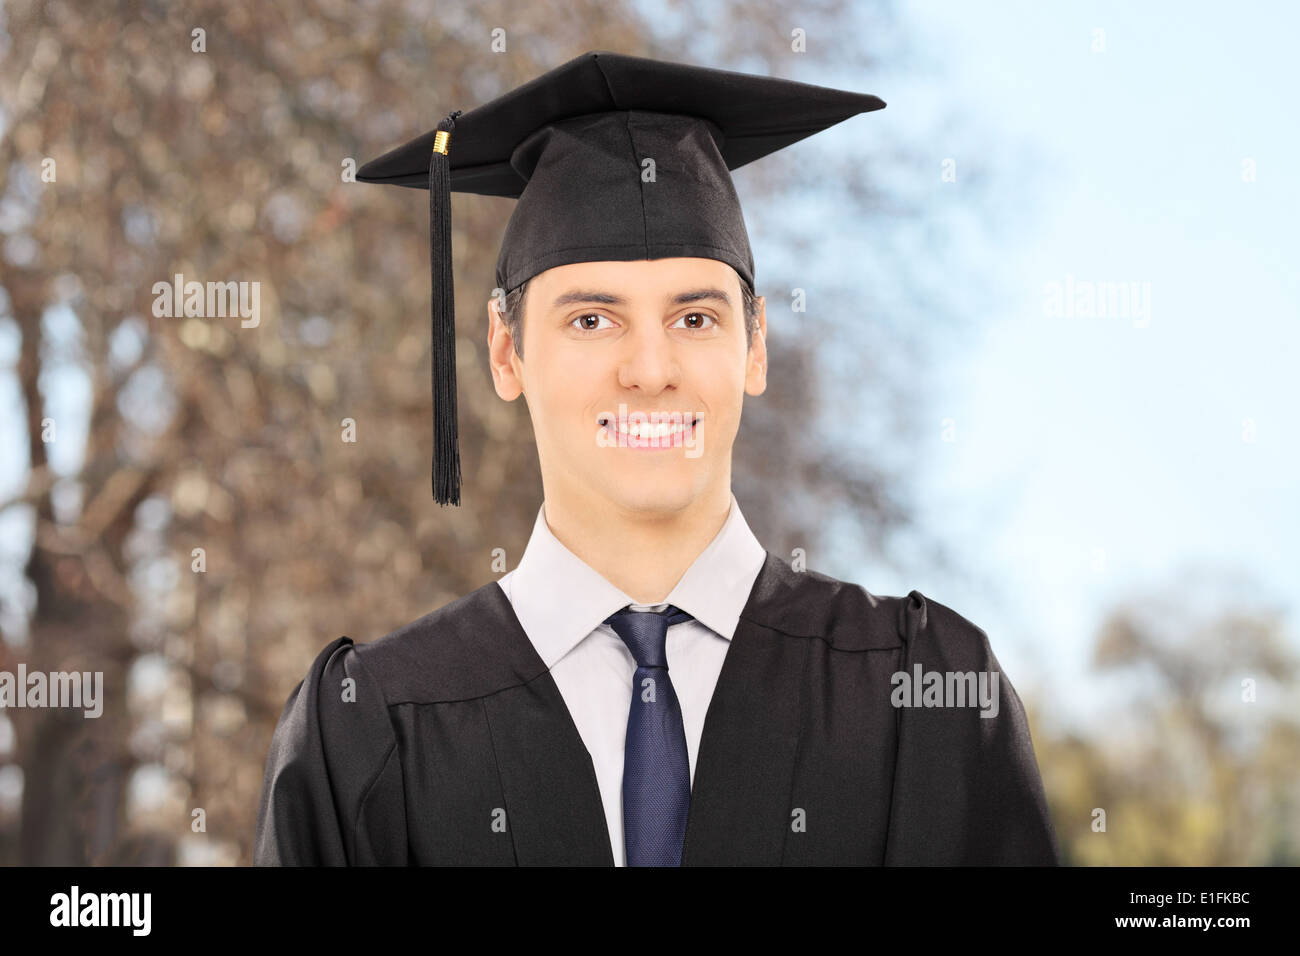 Men's Graduation Outfits 🎓 | Senior Graduates Portrait Ideas For Guys |  Men graduation outfit, Graduation outfit, Graduation outfit college